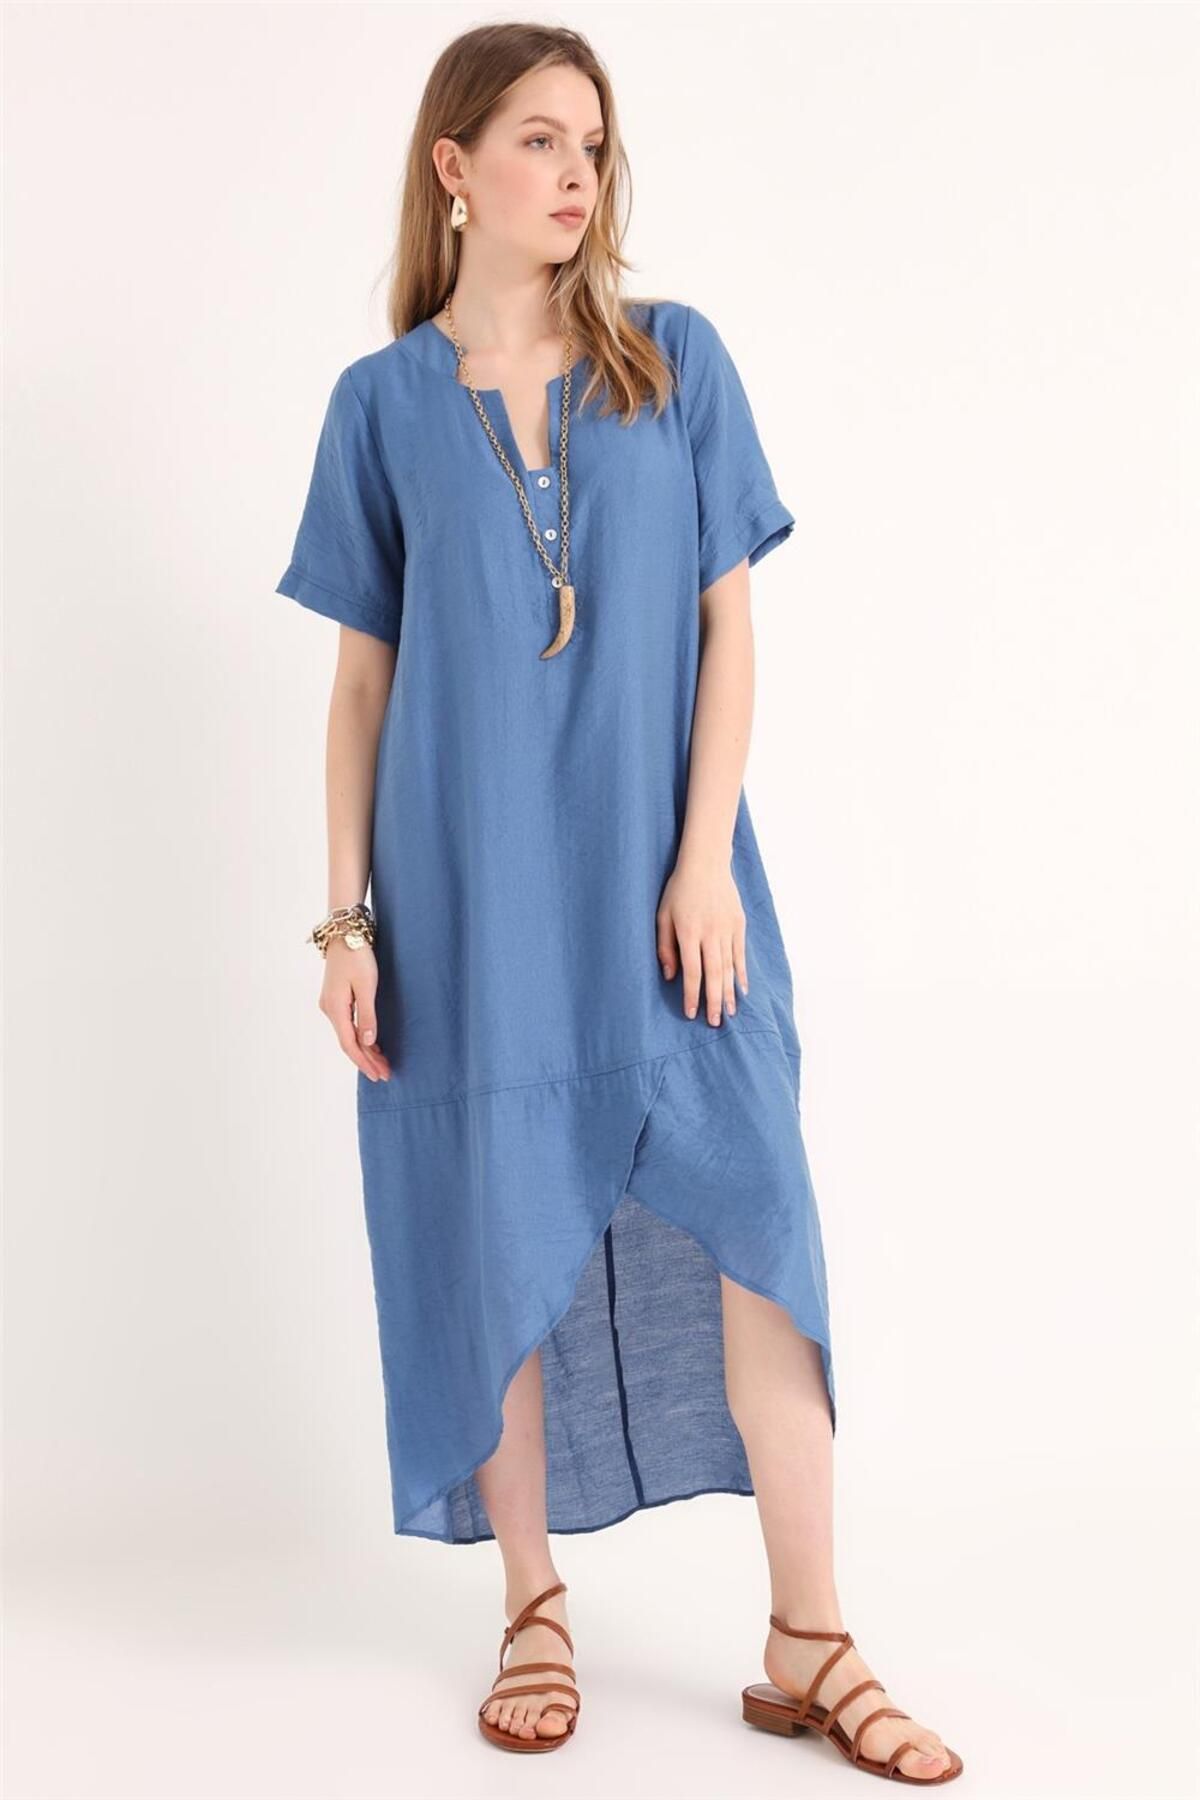 Home Store Elbise Tunusien 3 Dügmeli Yaka Kisa Kol - Mavi